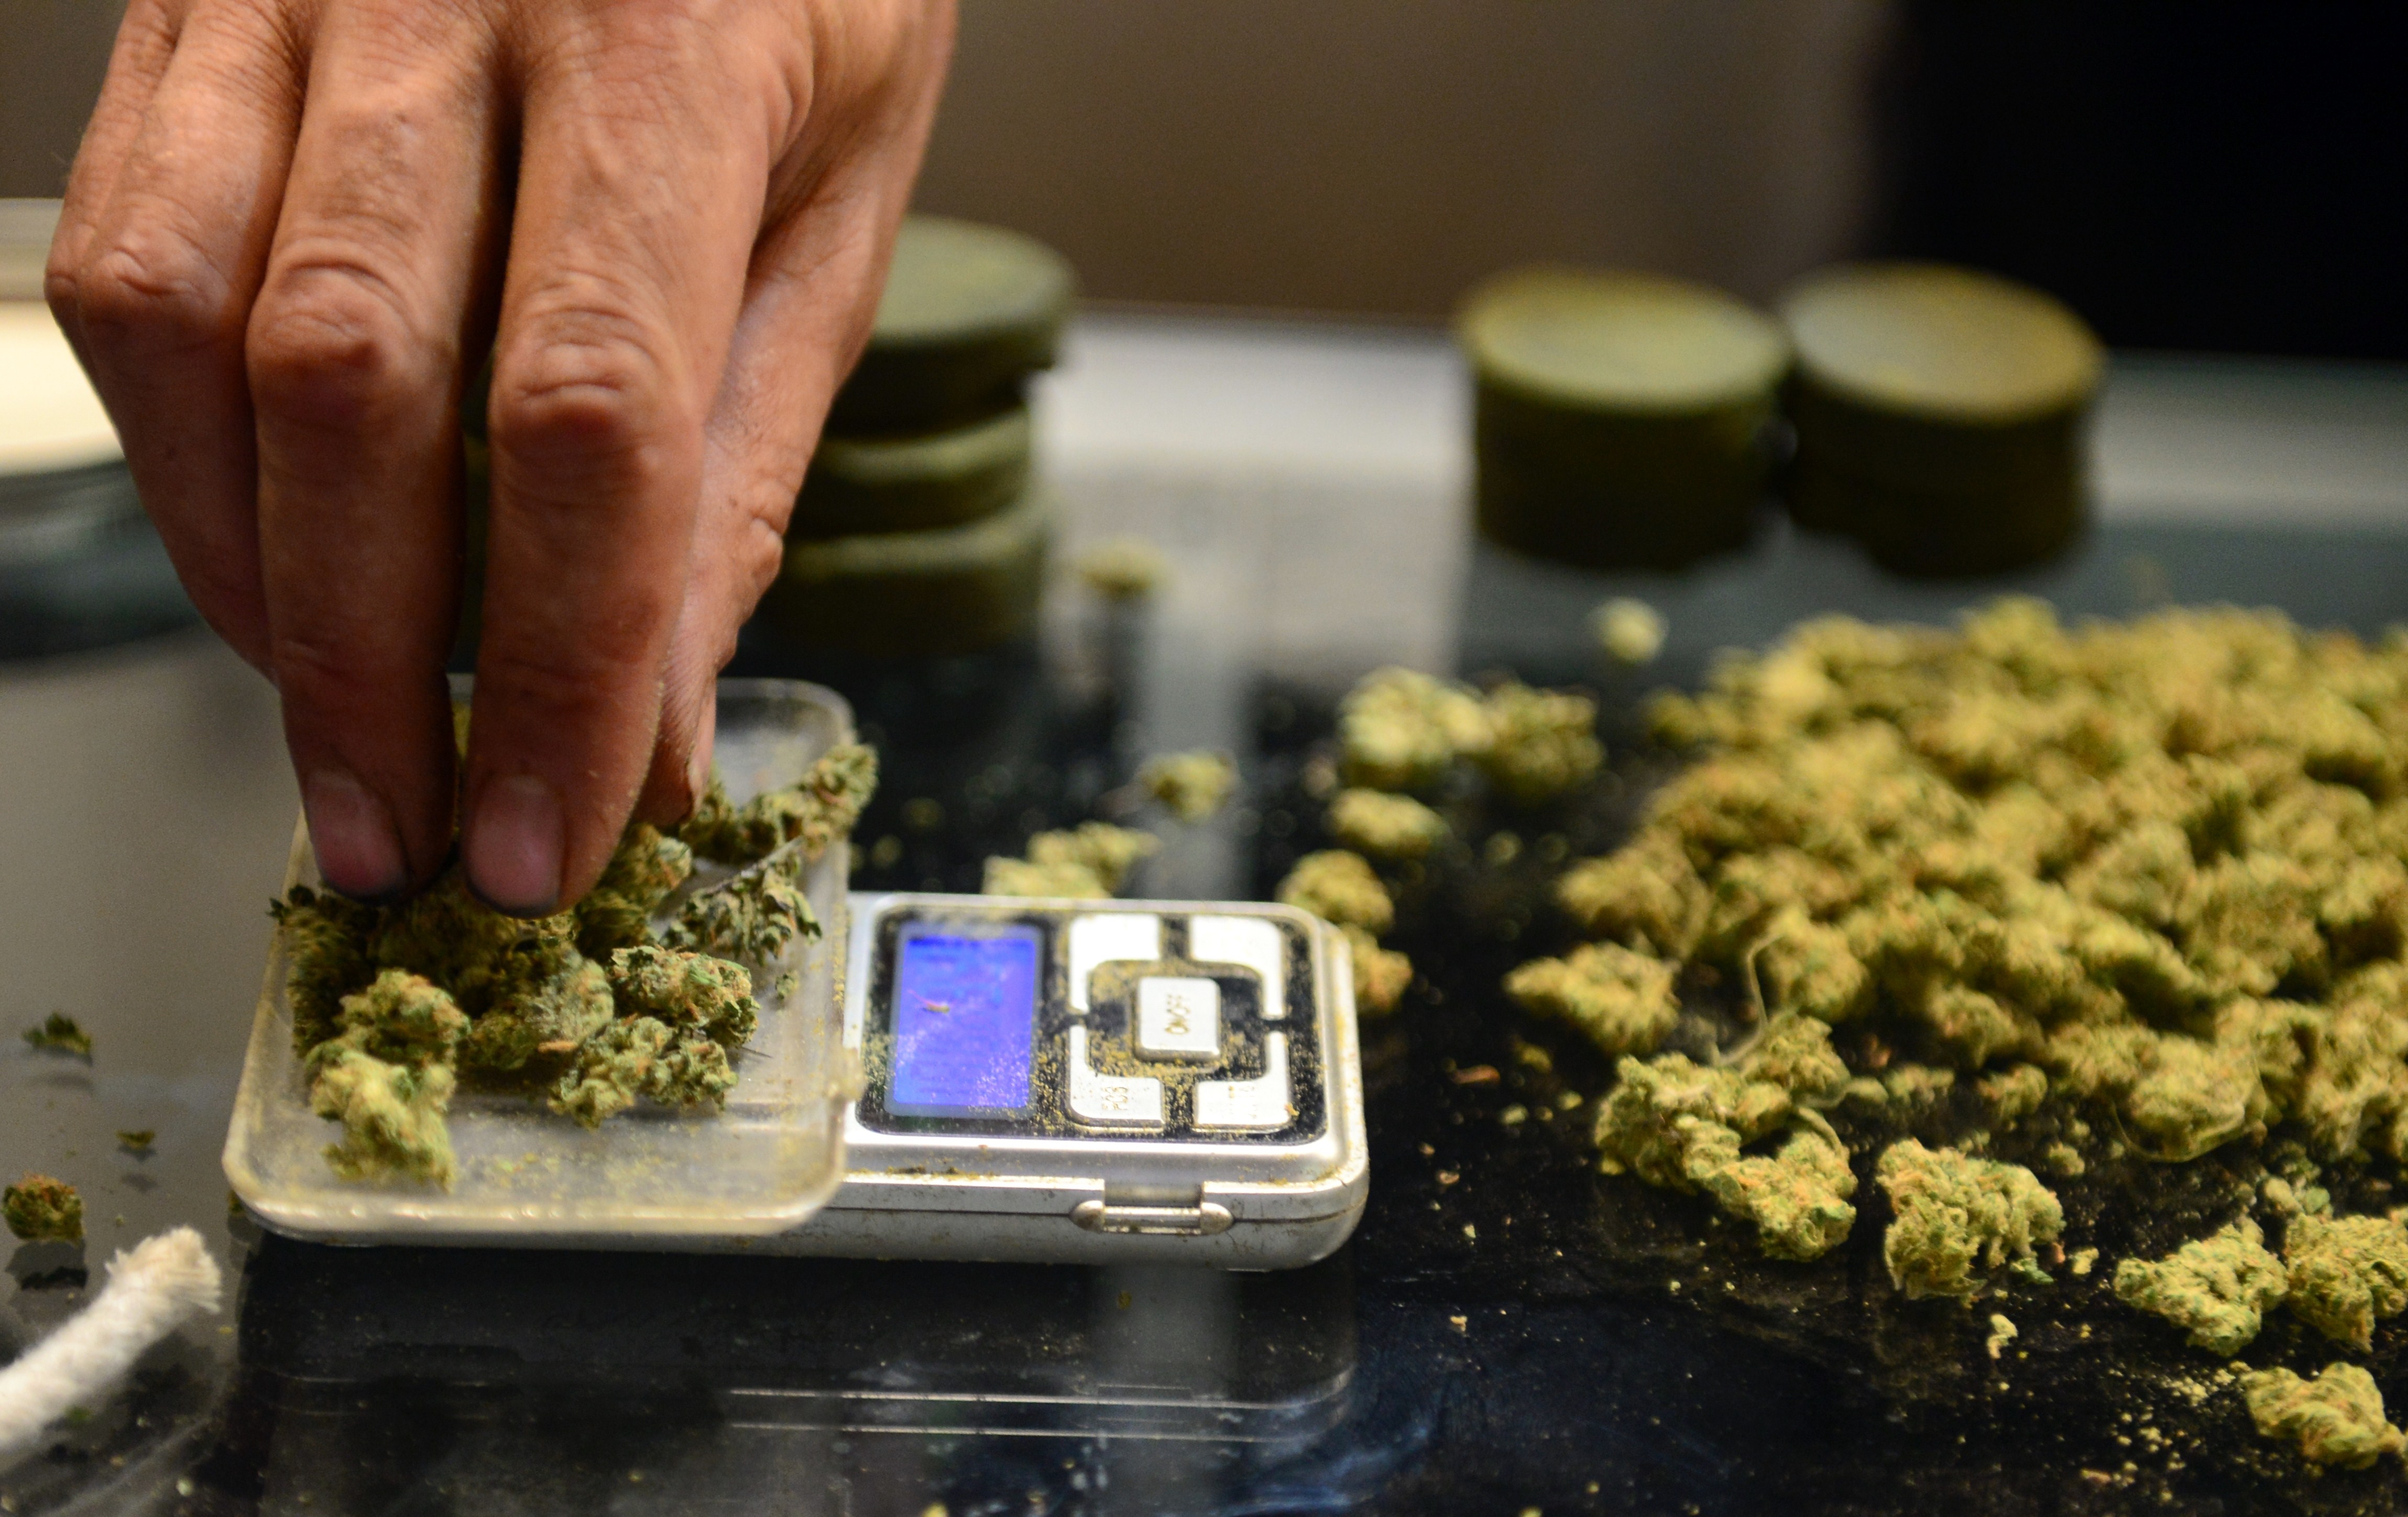 A vendor weighs marijuana buds